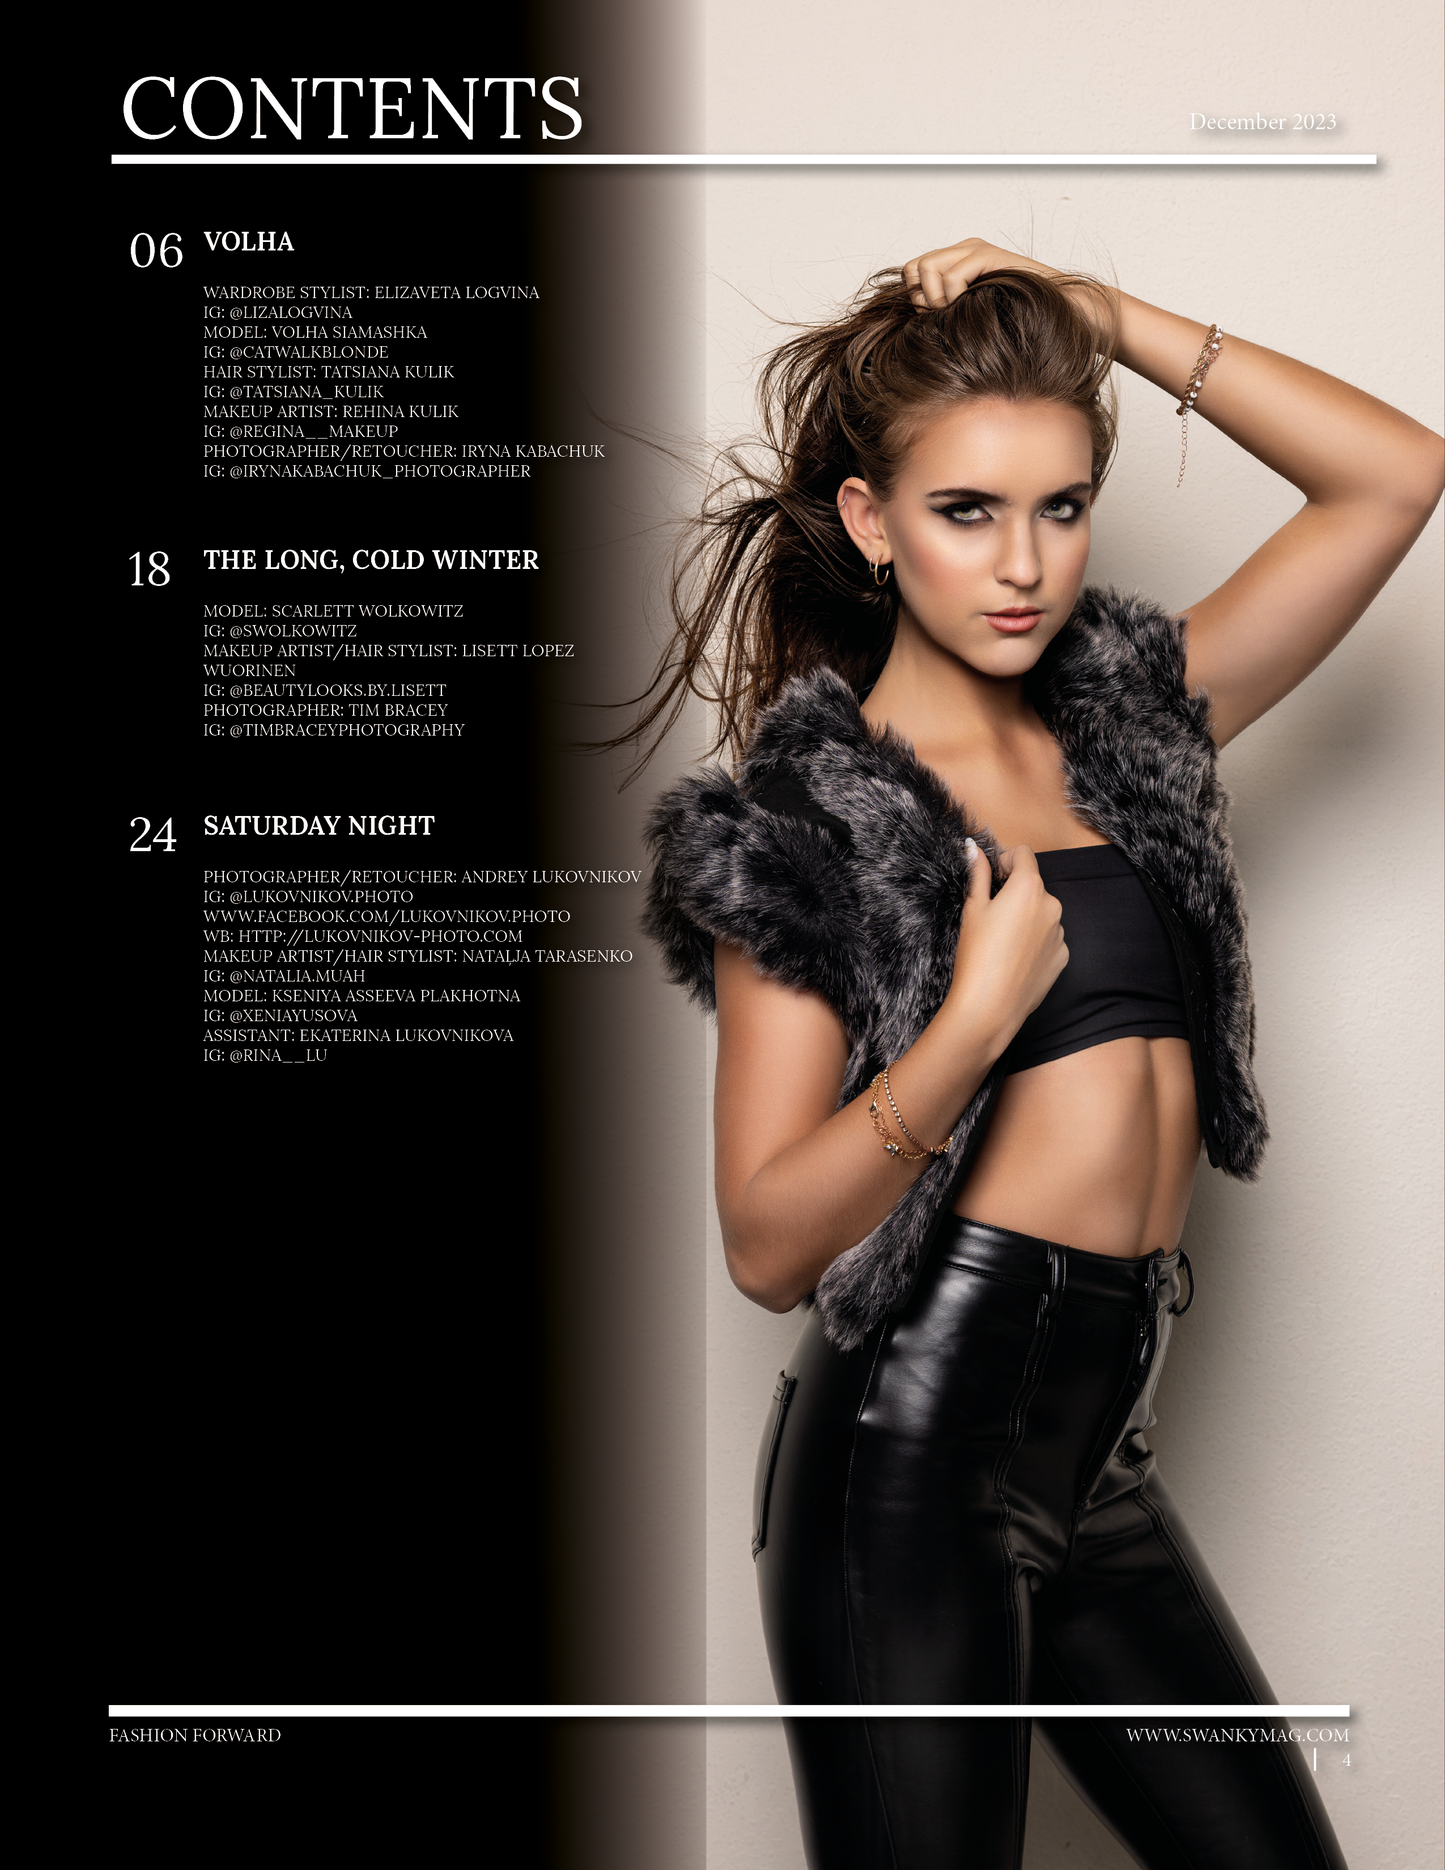 Swanky Fashion Magazine - December 2023: The Fashion Edition Issue I